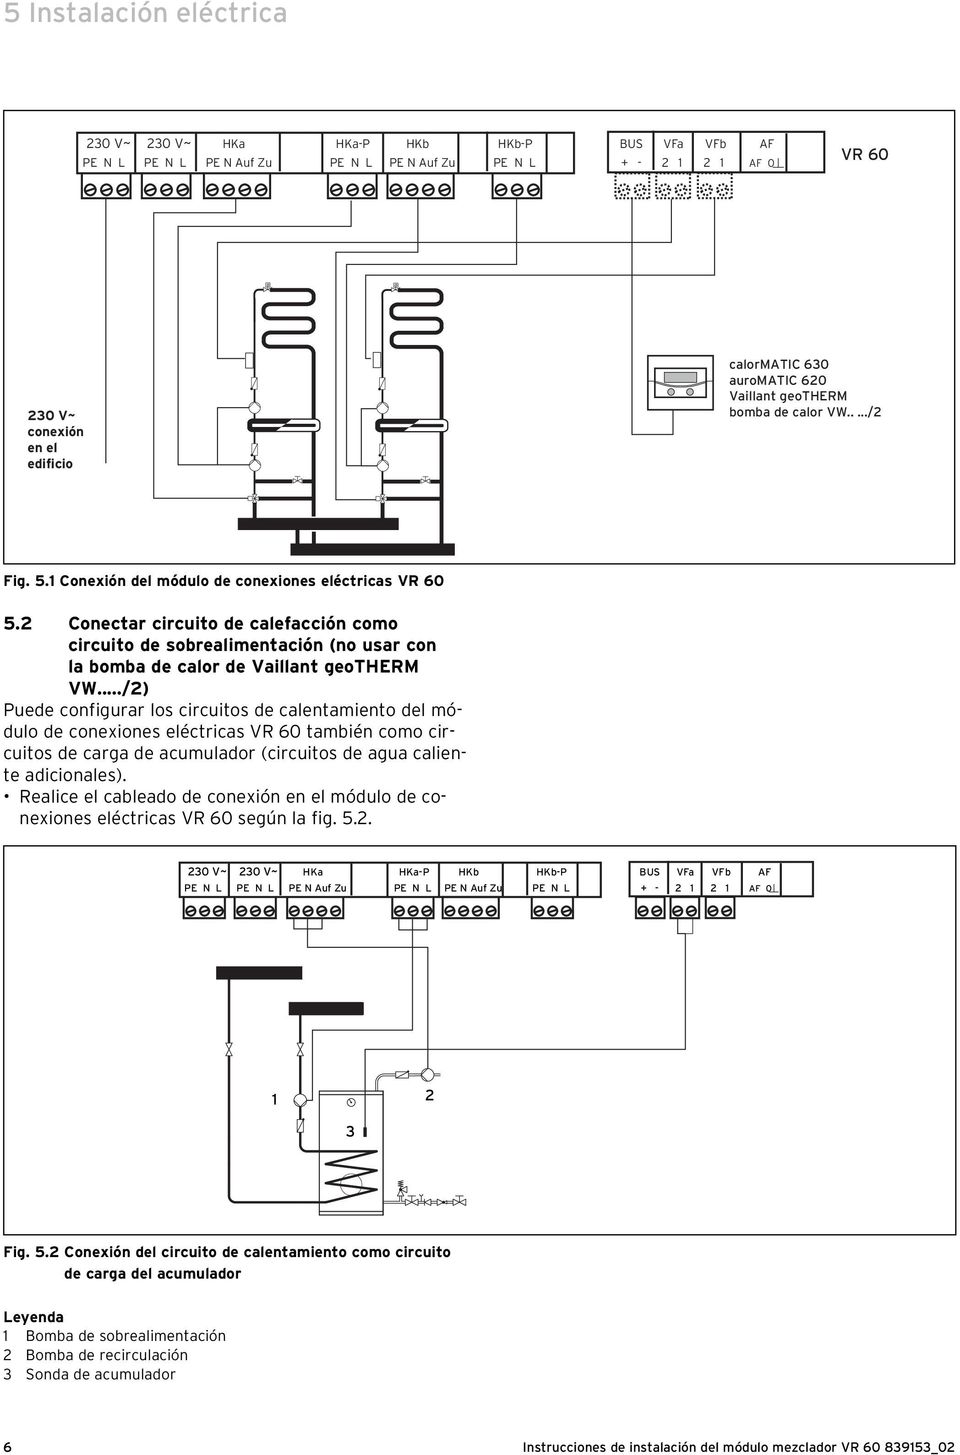 2 Conectar circuito de calefacción como circuito de sobrealimentación (no usar con la bomba de calor de Vaillant geotherm VW.